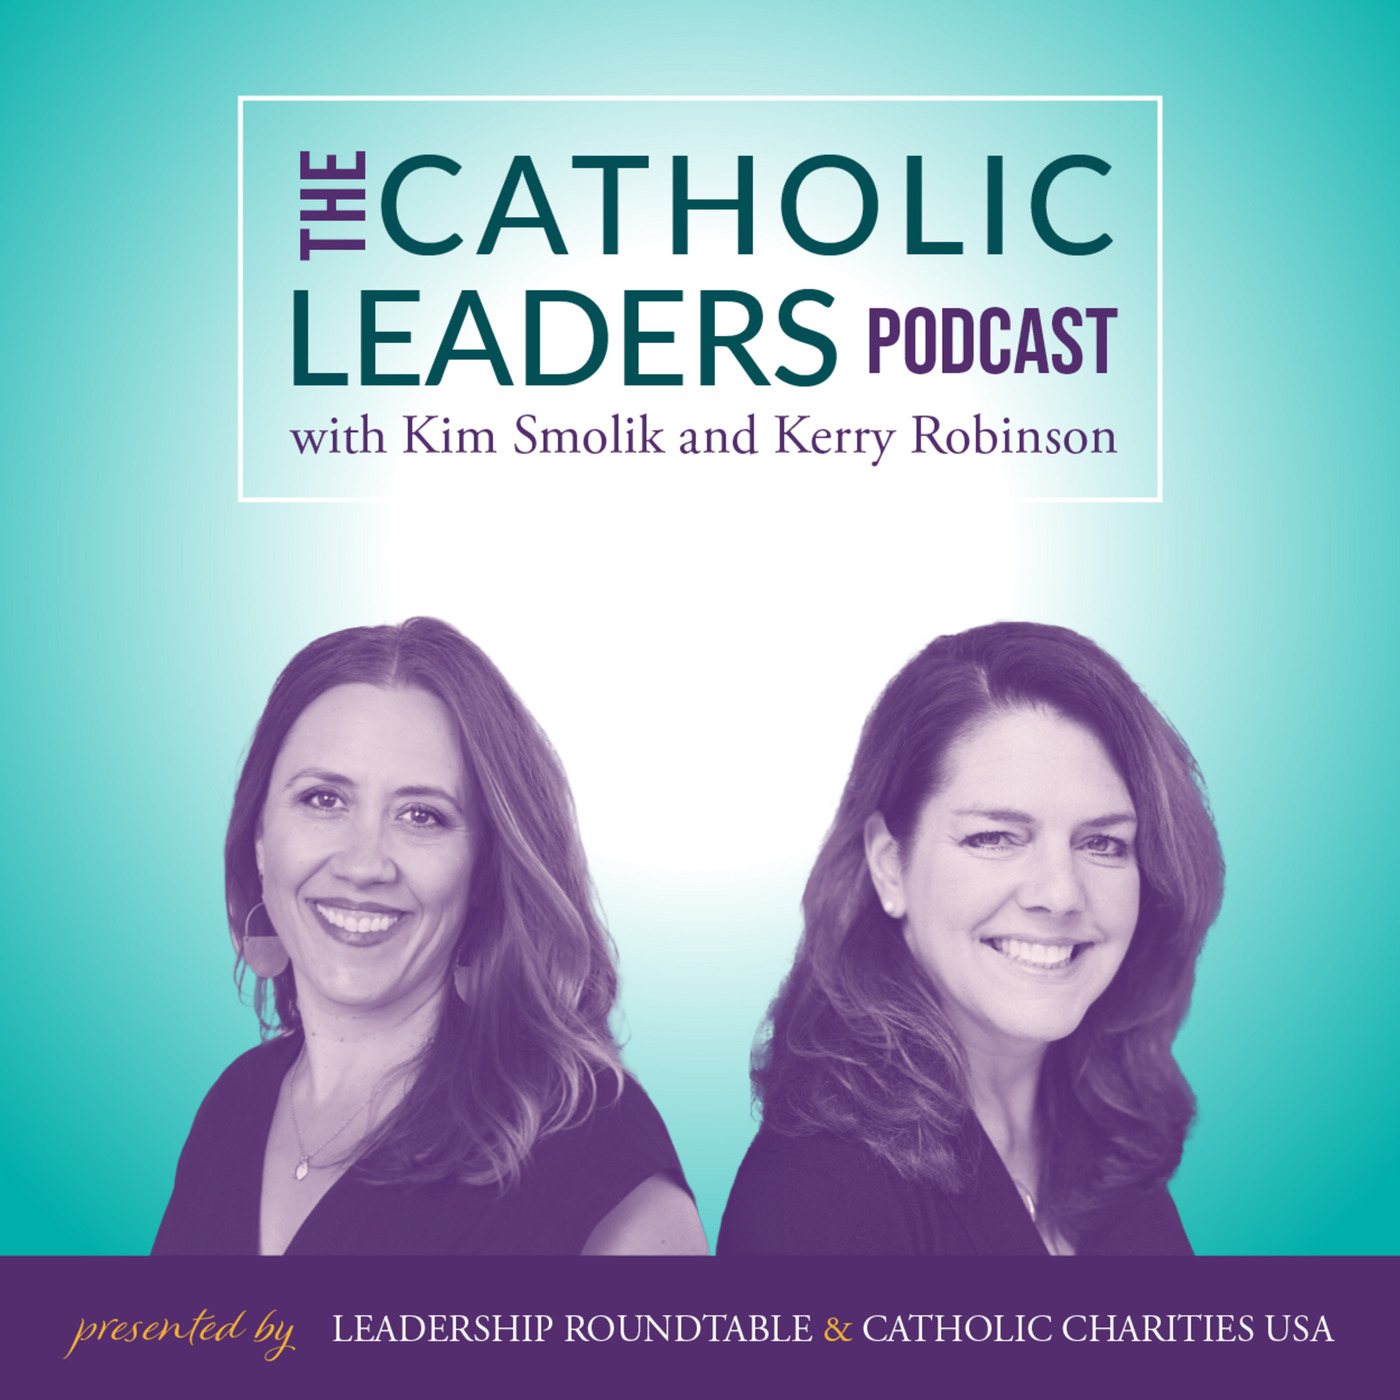 The Catholic Leaders Podcast: Season Two Trailer